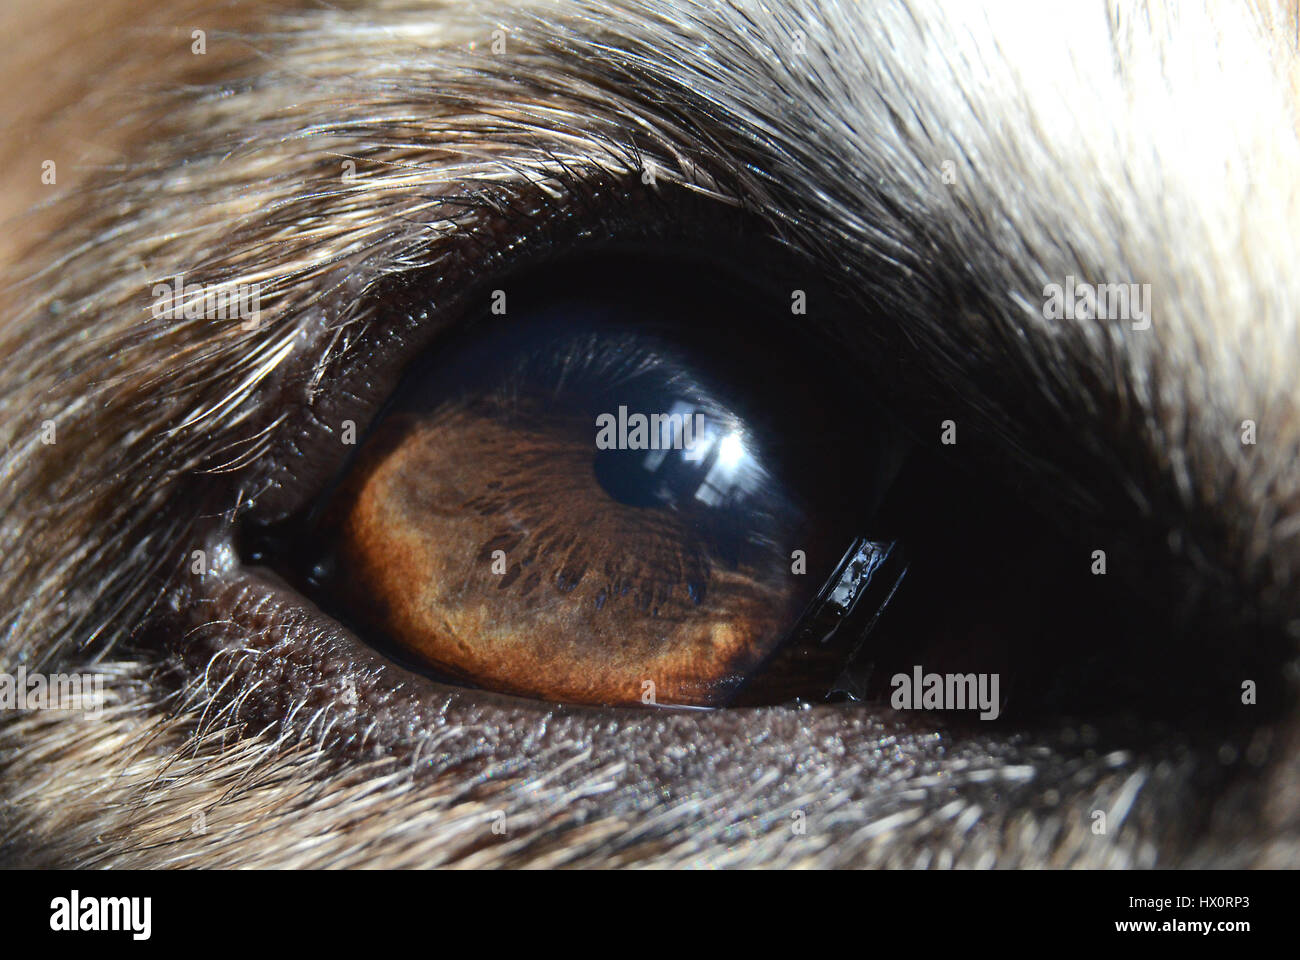 Extreme closeup on a dog's eye. Stock Photo